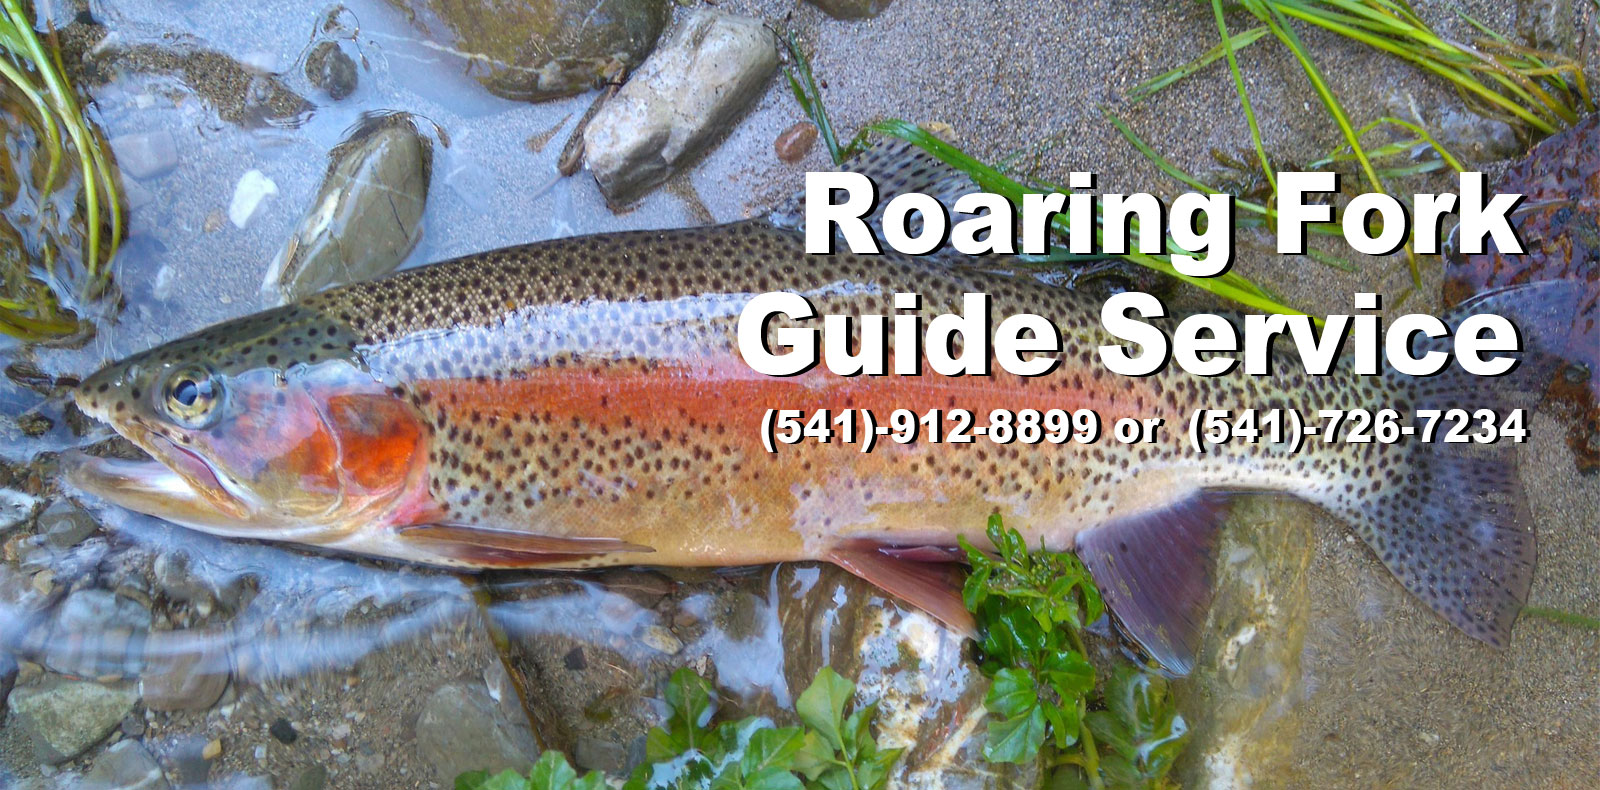 Roaring Fork Guide Service Oregon Fishing Trips / Roaring Forks Guide  Service